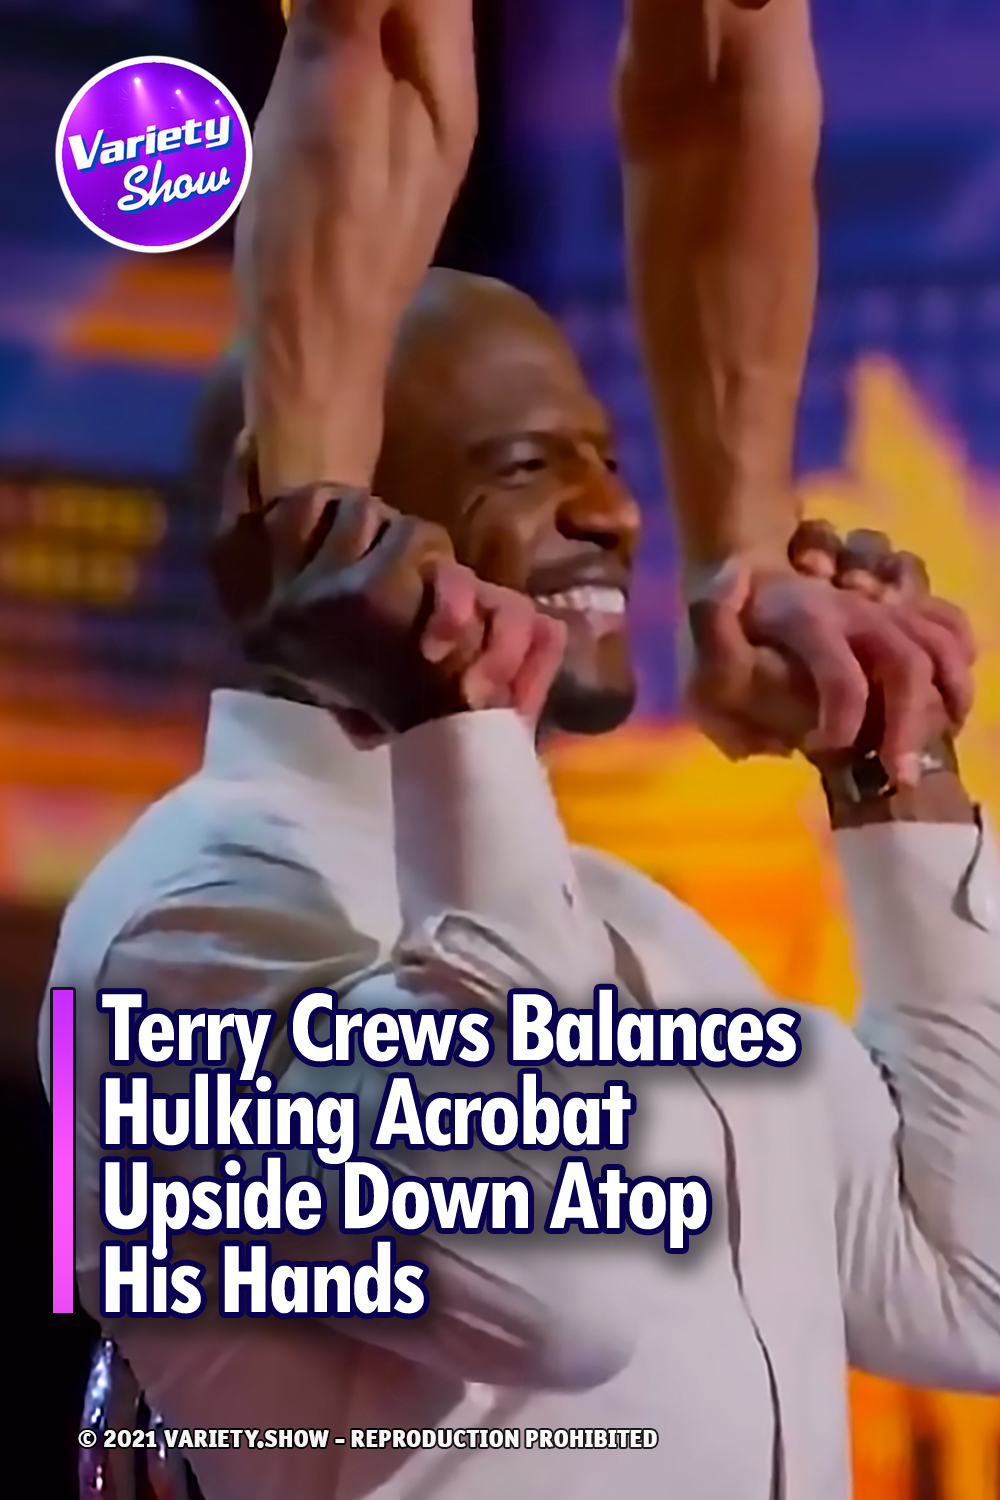 Terry Crews Balances Hulking Acrobat Upside Down Atop His Hands